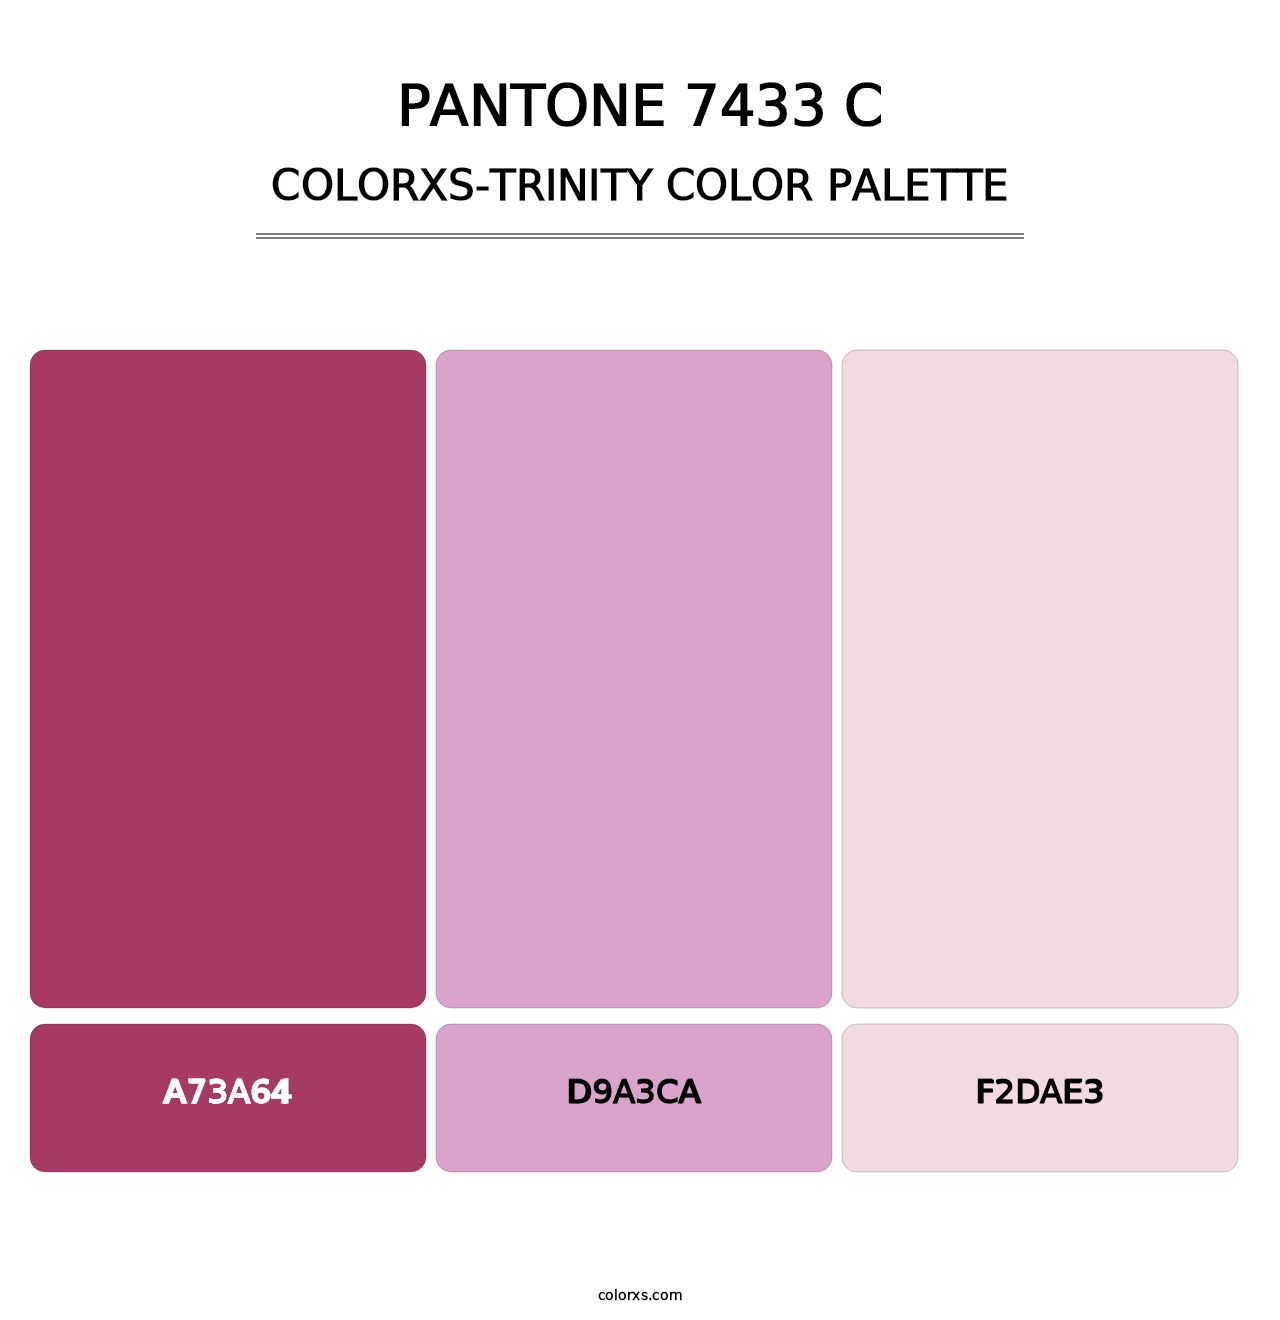 PANTONE 7433 C - Colorxs Trinity Palette